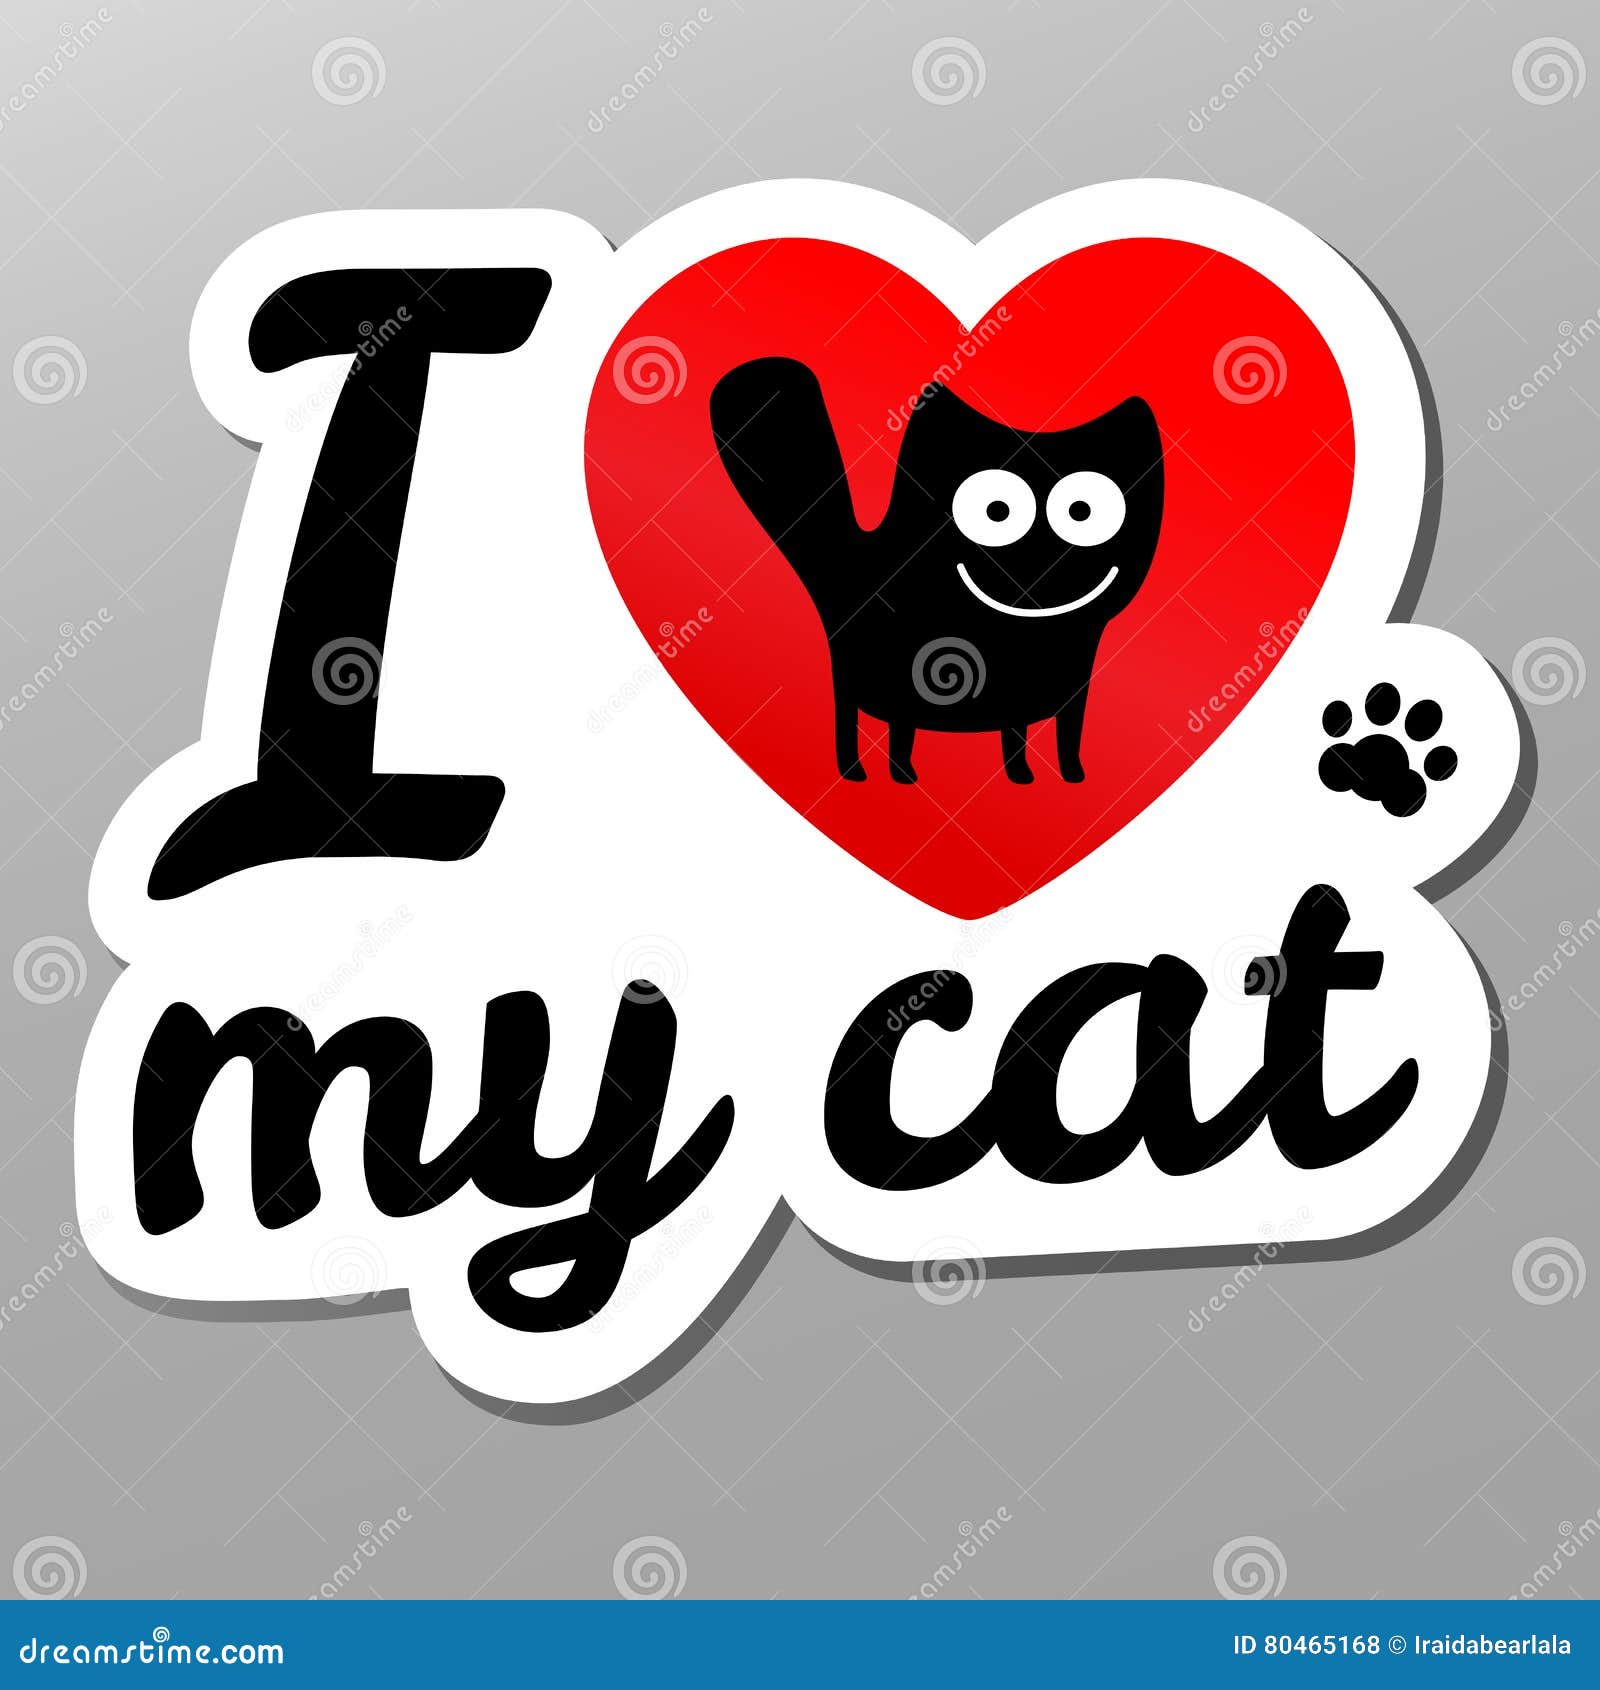 I love may cat stock vector. Illustration of vector, love - 80465168